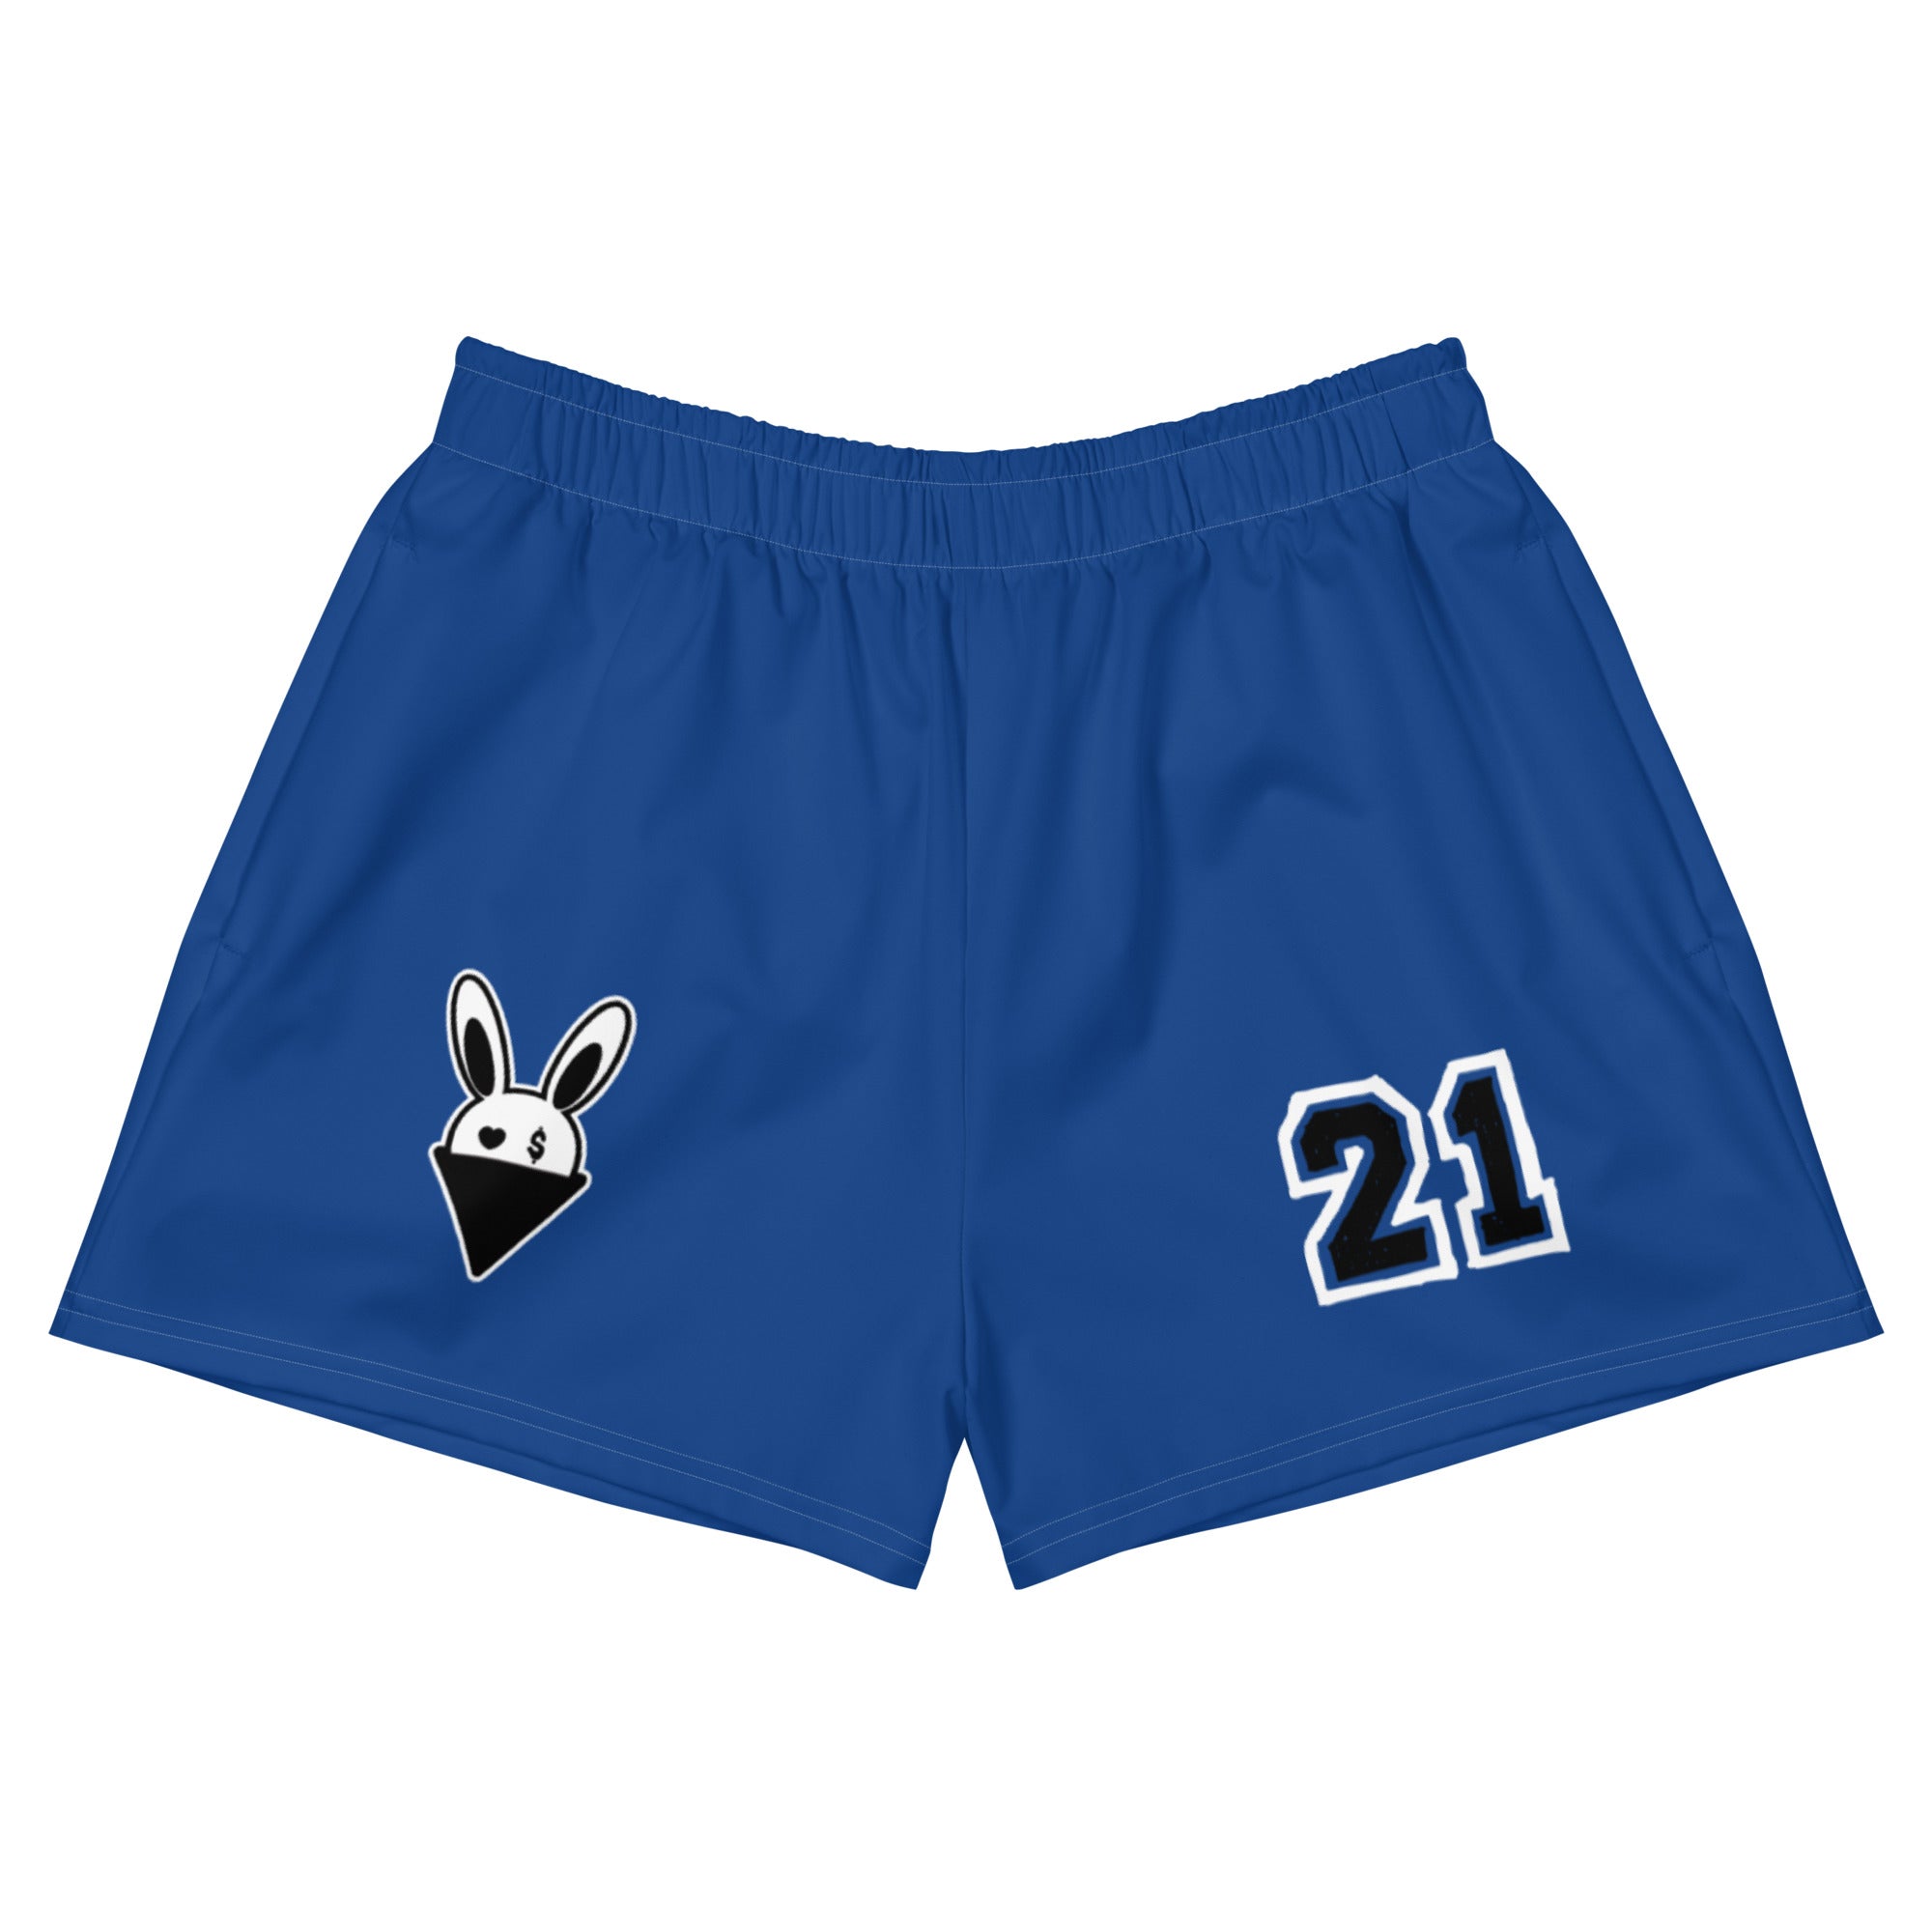 BUNNII GANG "TEAM BUNNII" Blue Athletic Shorts